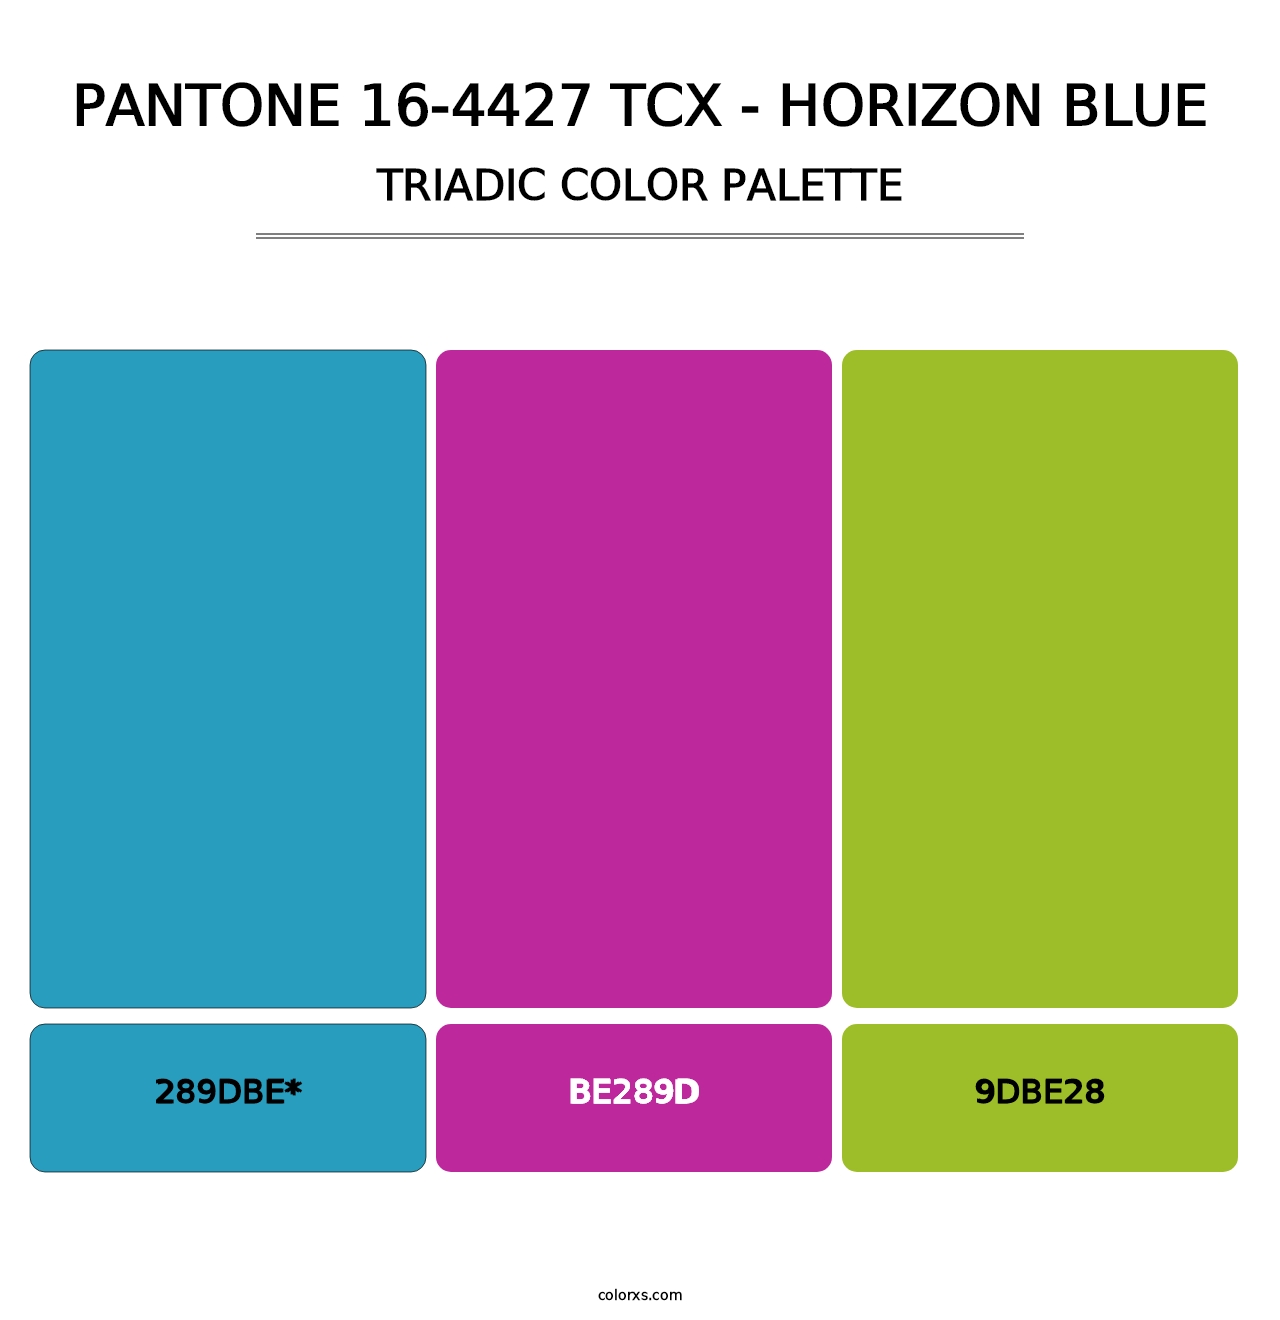 PANTONE 16-4427 TCX - Horizon Blue - Triadic Color Palette